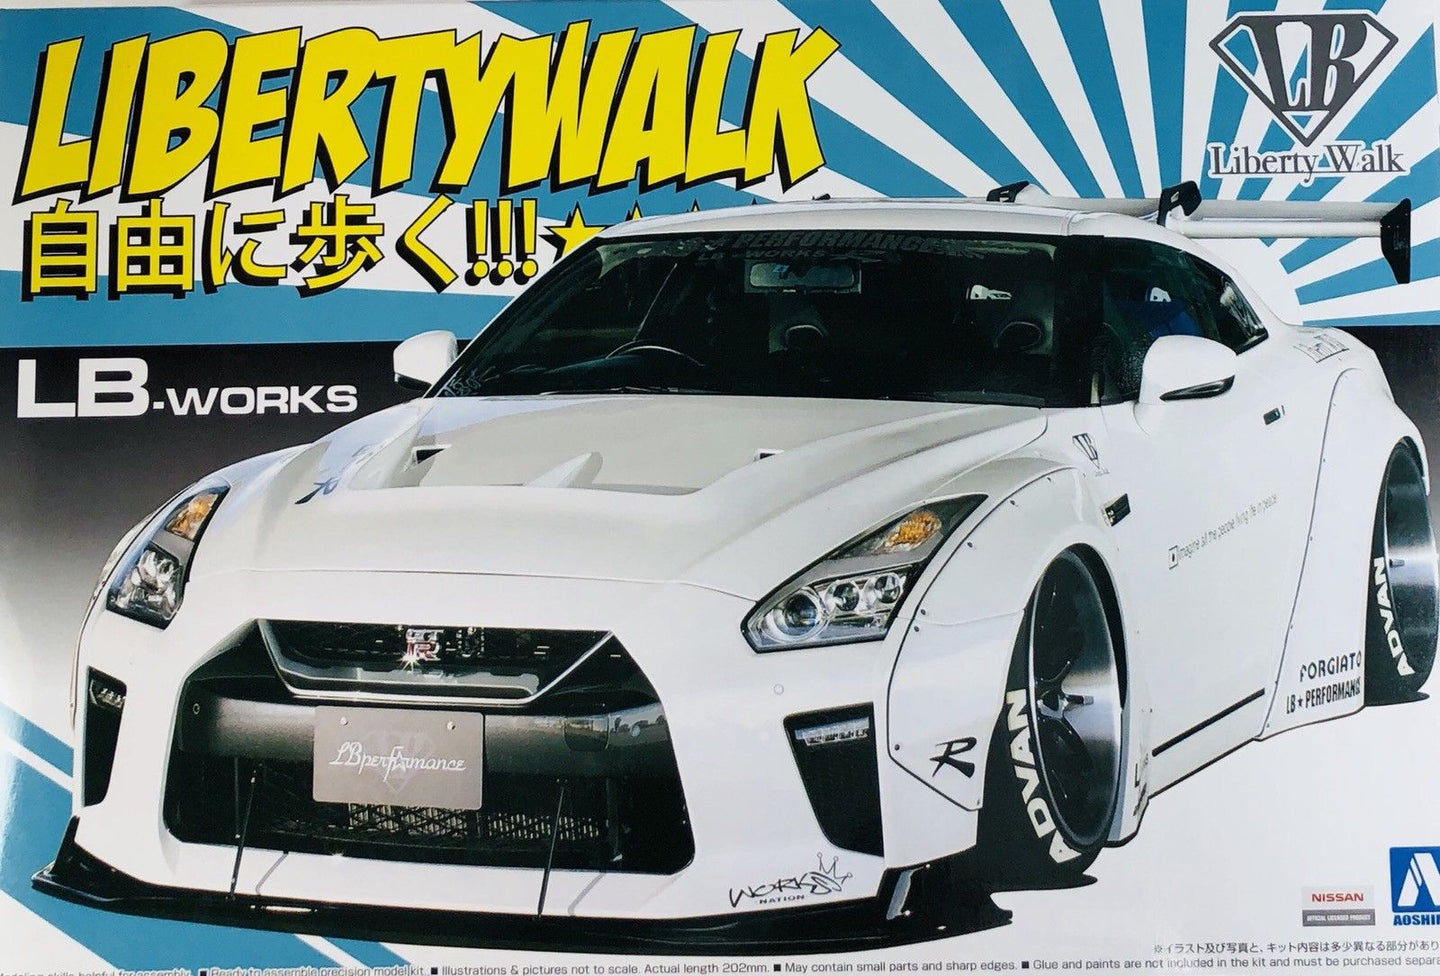 Aoshima 1/24 Nissan R35 GT-R Liberty walk LB Works 05590